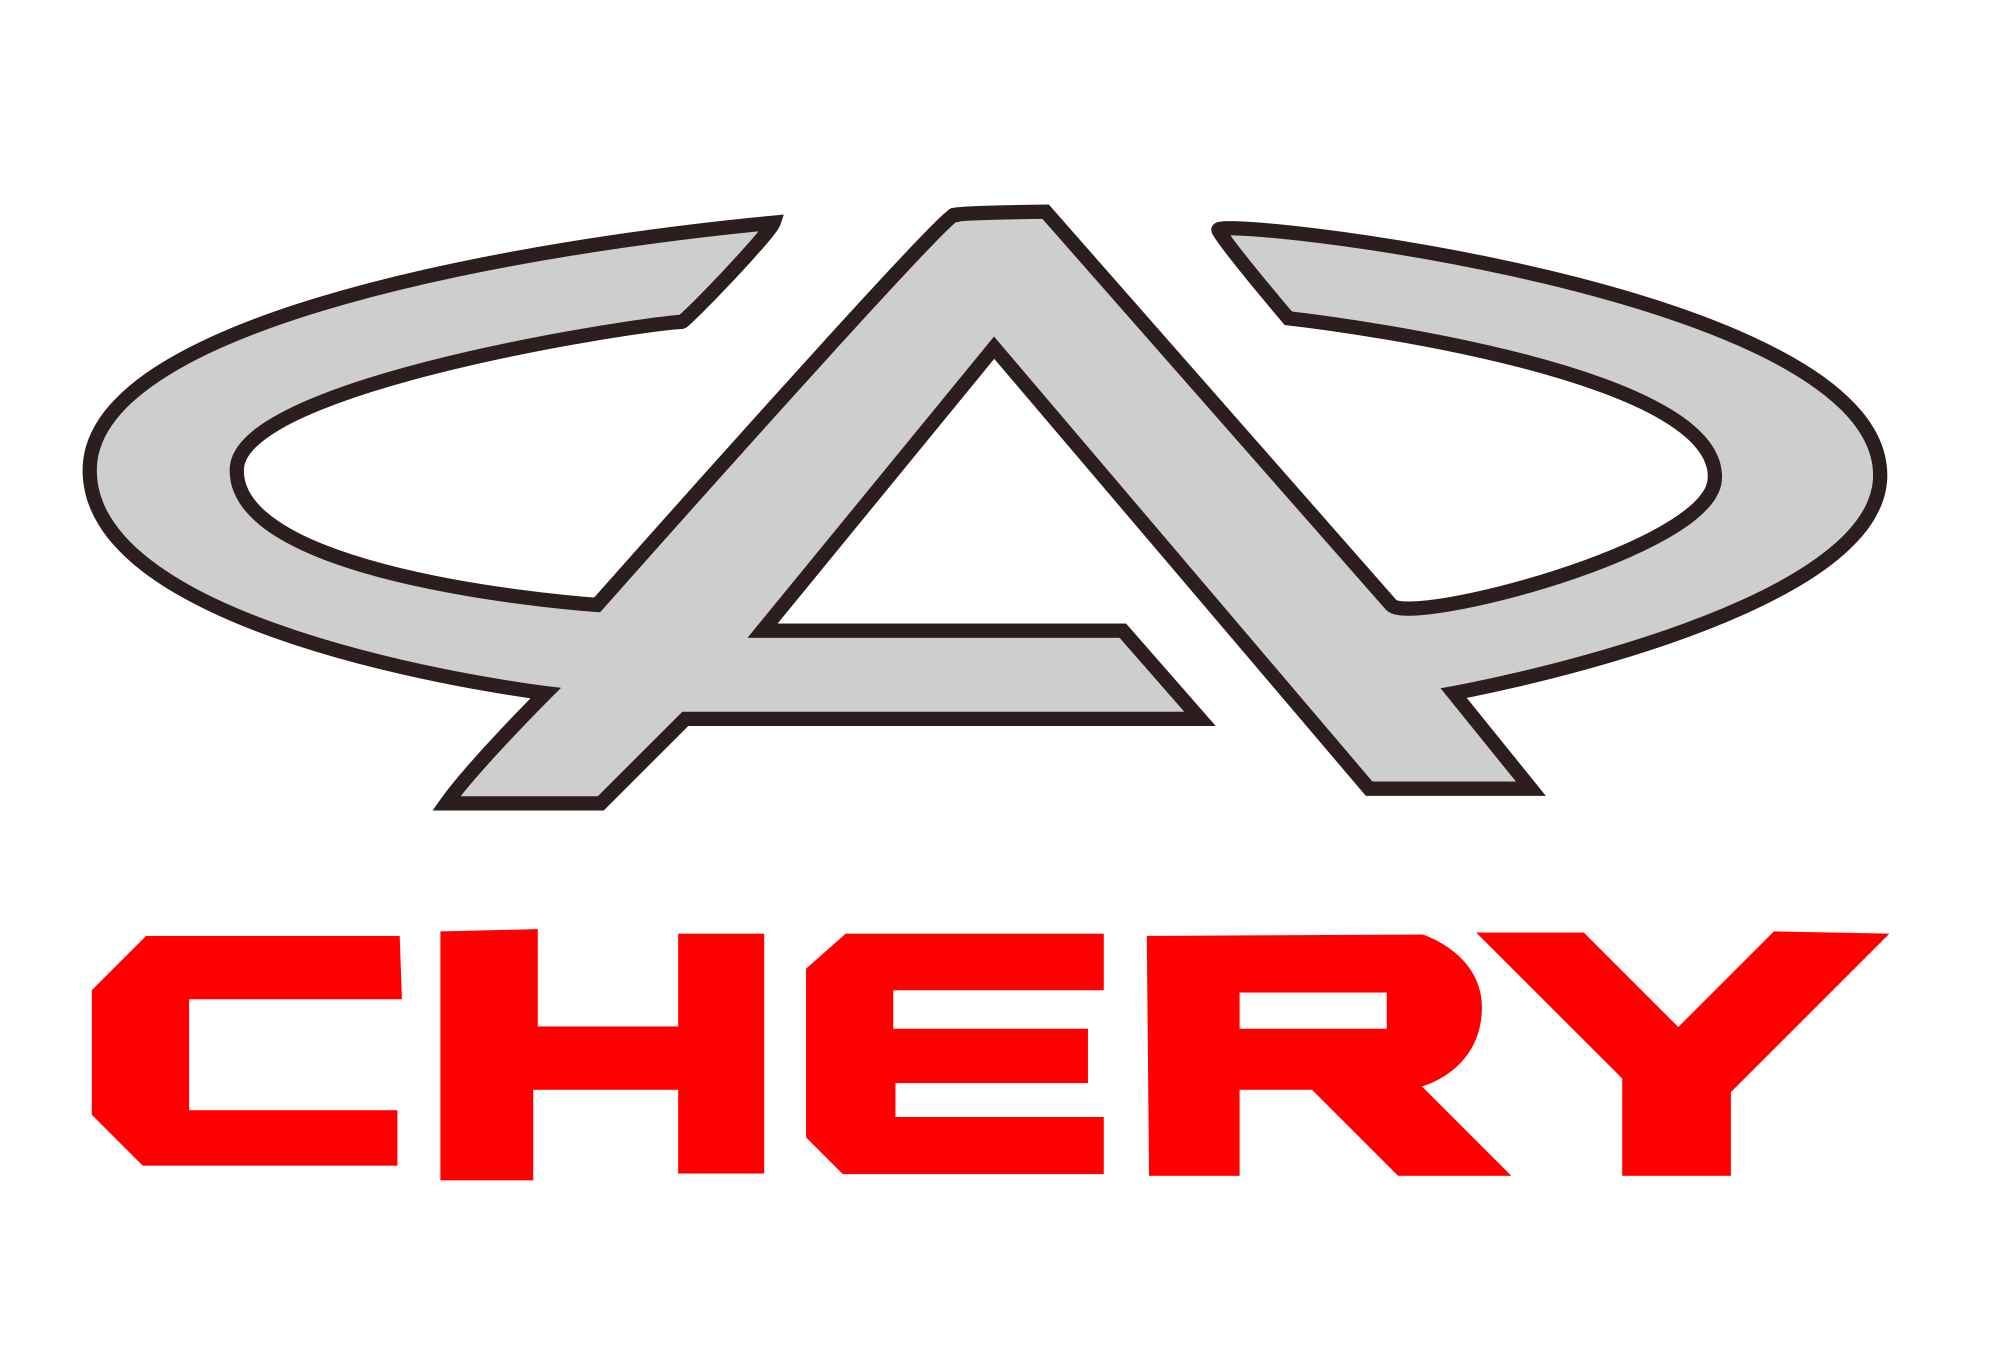 Chery логотип. Chery эмблема. Логотип автомобиля черри. Чери Тигго лого. Chery машина значок.